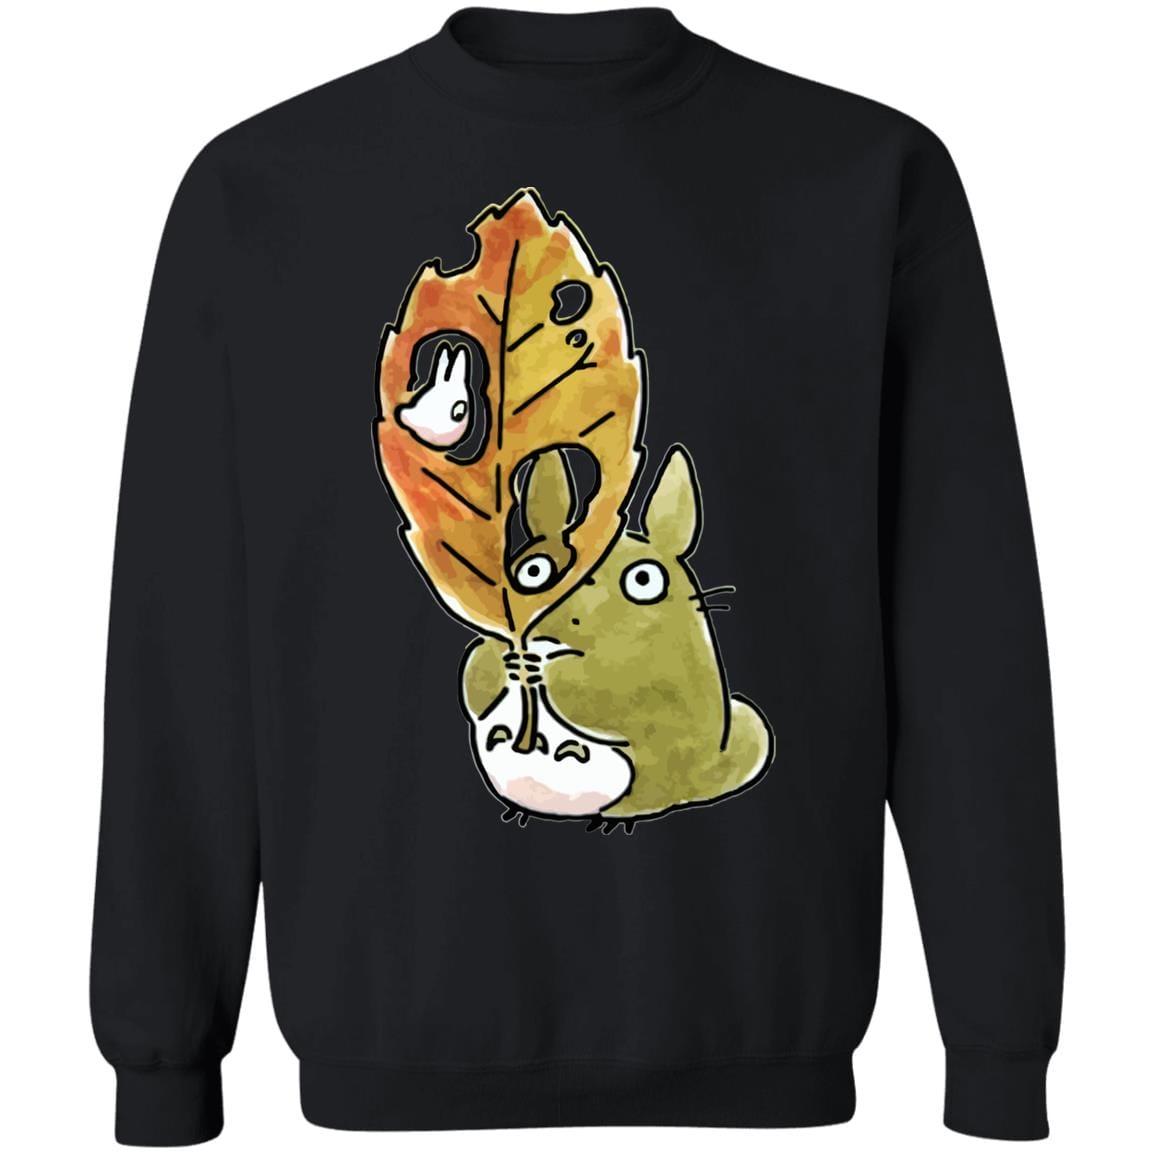 Totoro and the Big Leaf Cute Drawing Sweatshirt